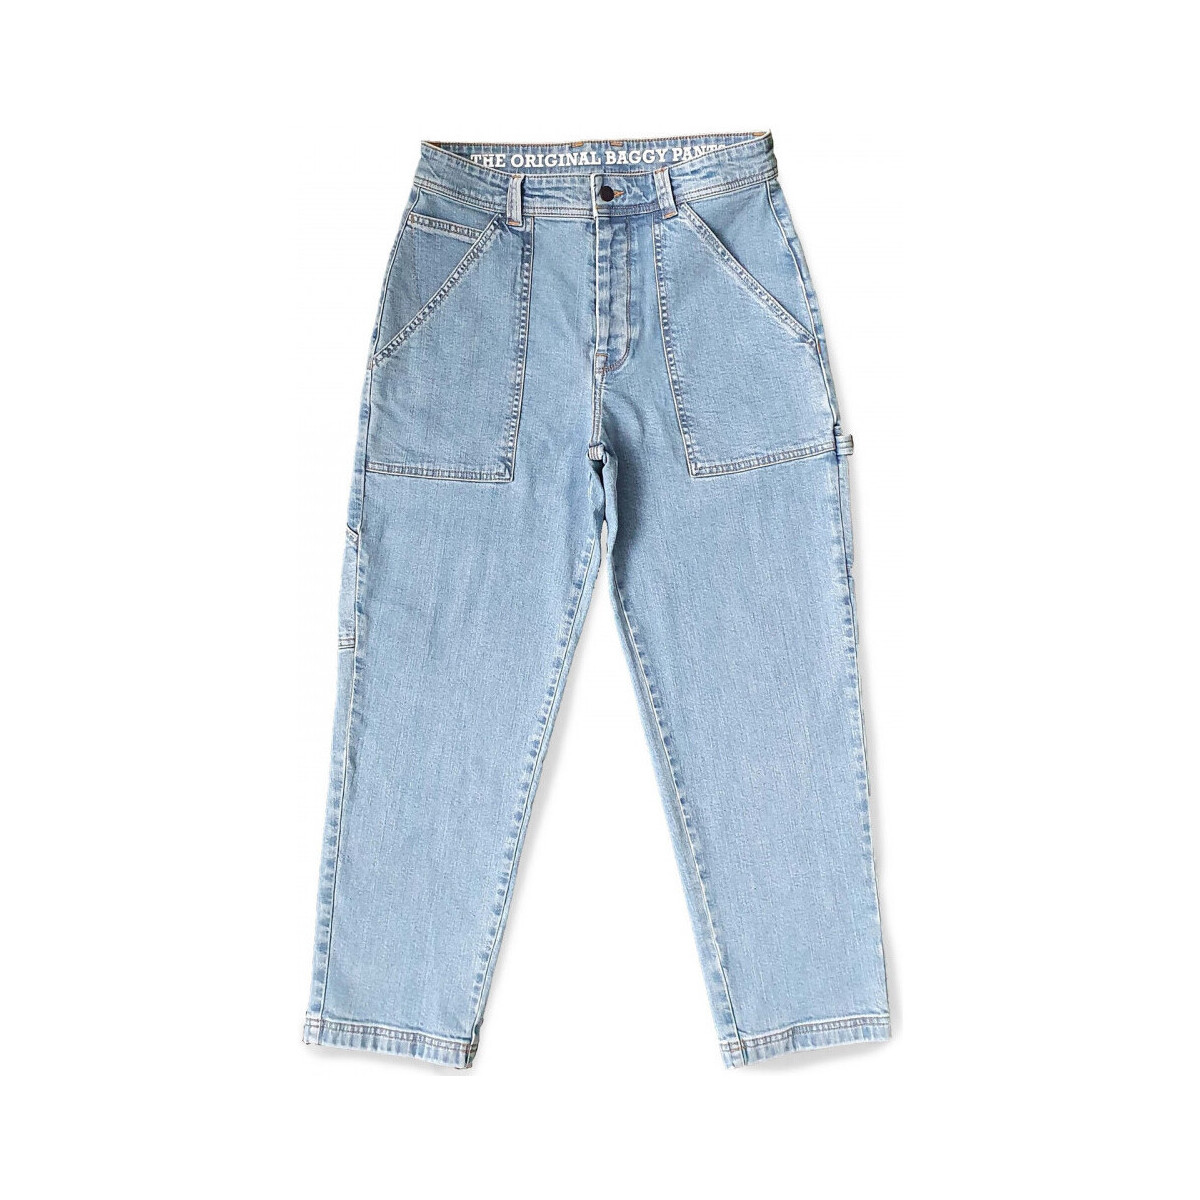 Textiel Broeken / Pantalons Homeboy X-tra work pants Blauw